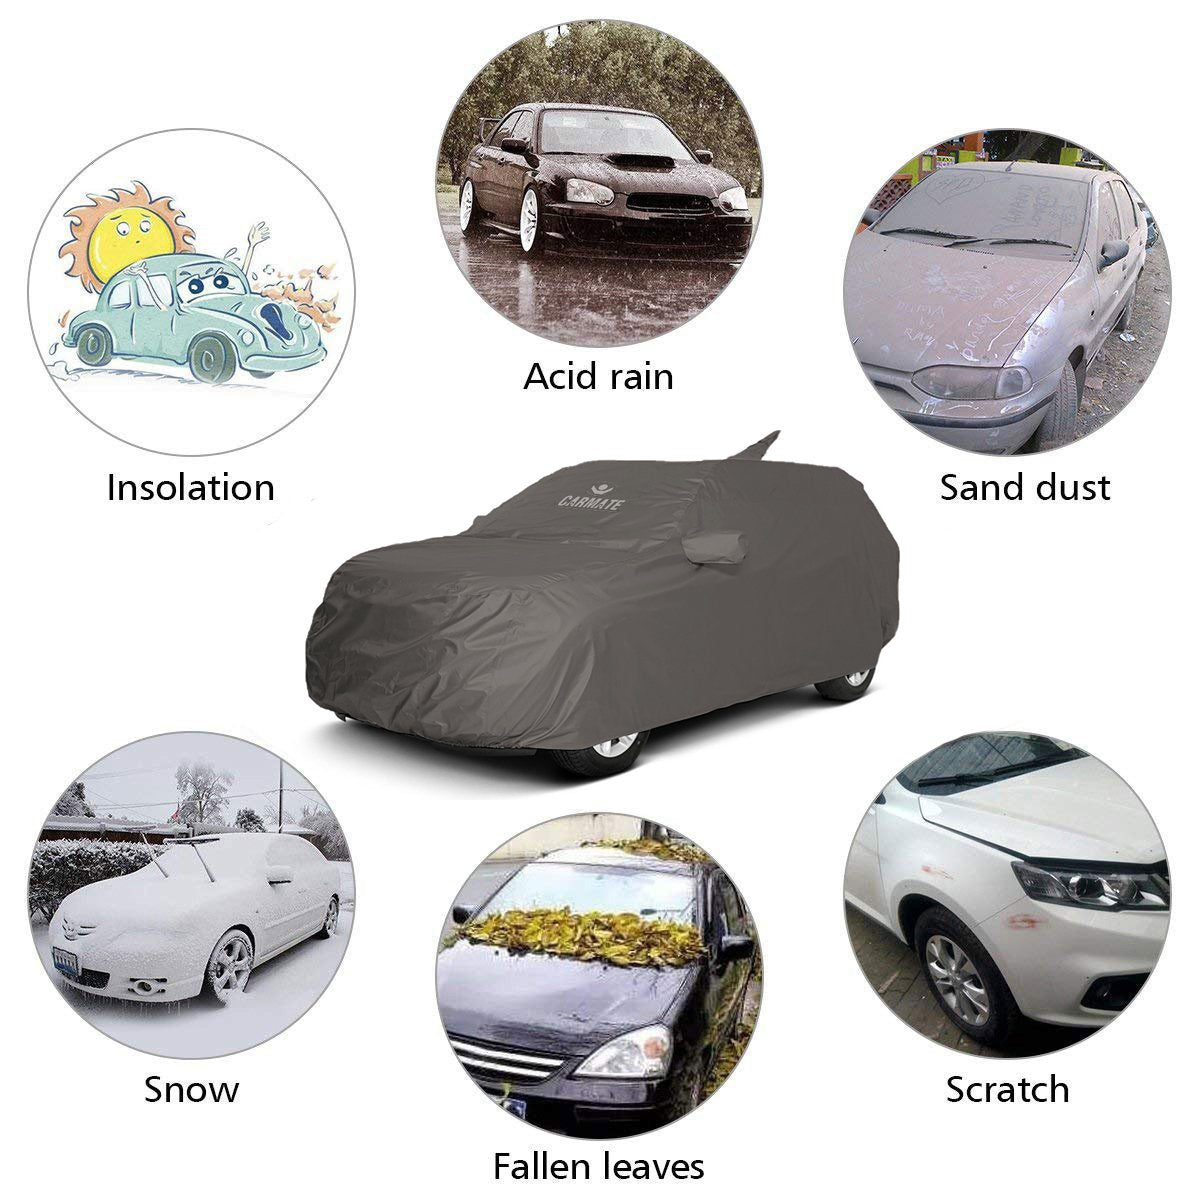 Carmate Car Body Cover 100% Waterproof Pride (Grey) for Porsche - Cayenne S - CARMATE®